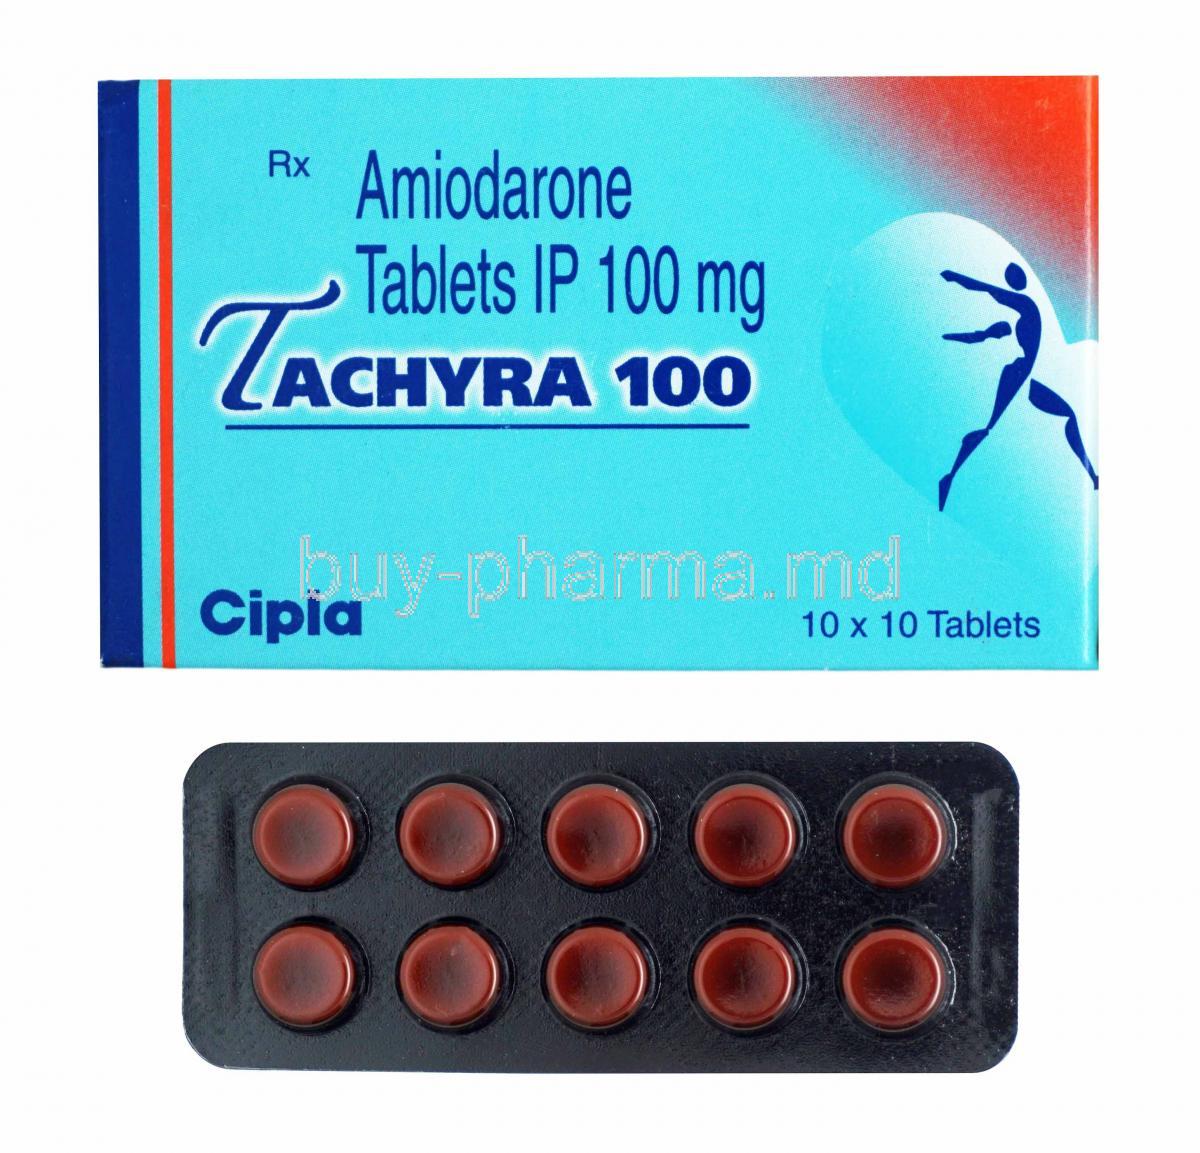 Tachyra, Amiodarone 100mg box and tablets